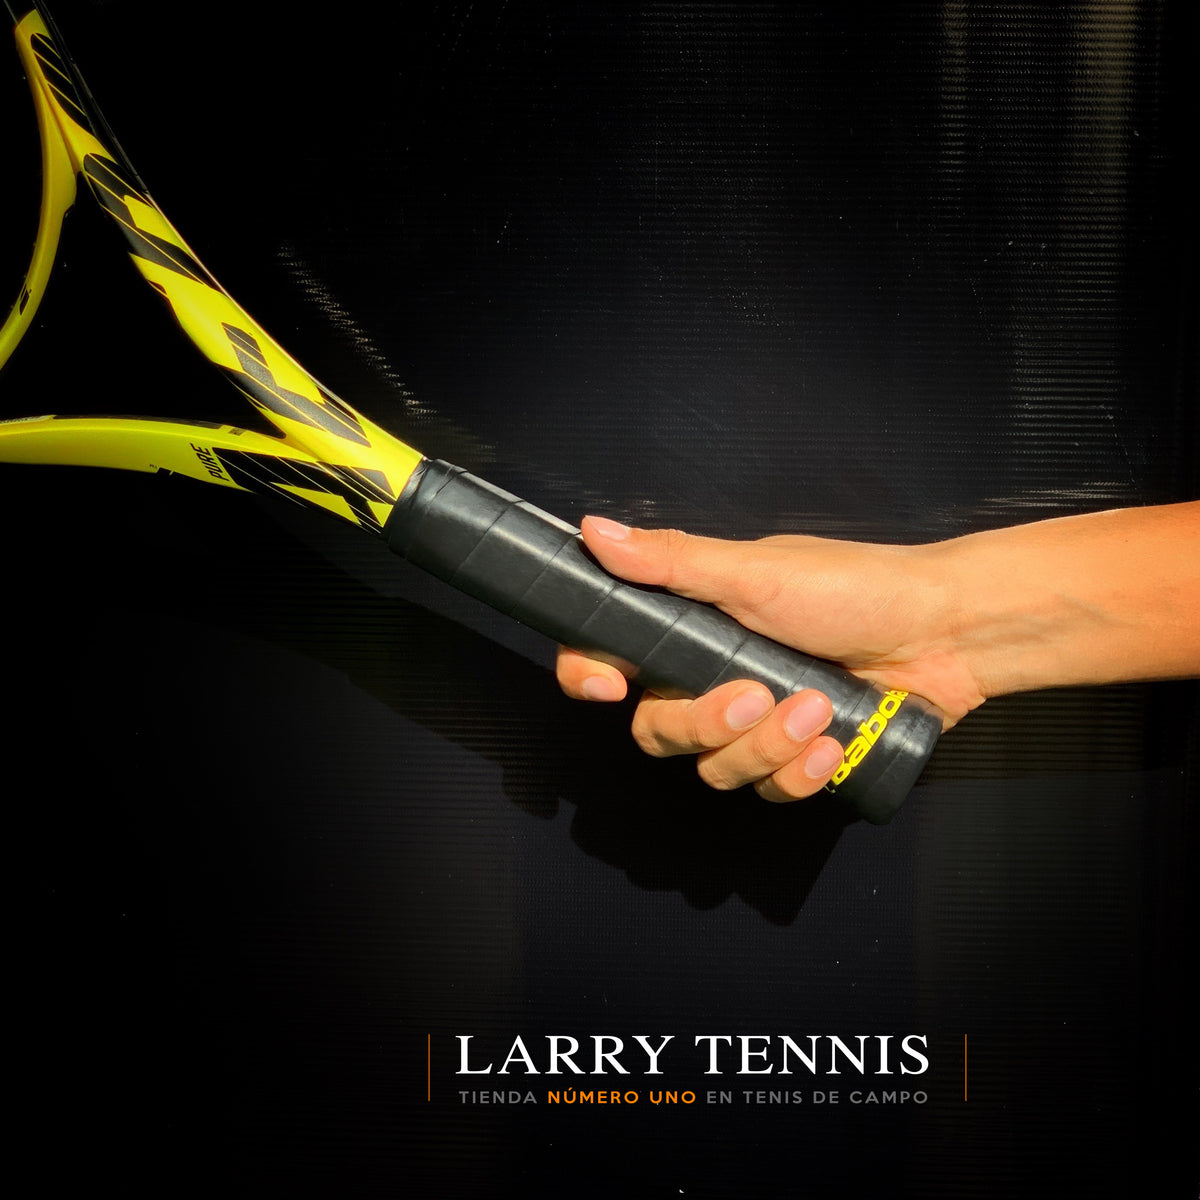 Oferta de trabajo agujero paso Elegir tamaño grip correcto – Larry Tennis